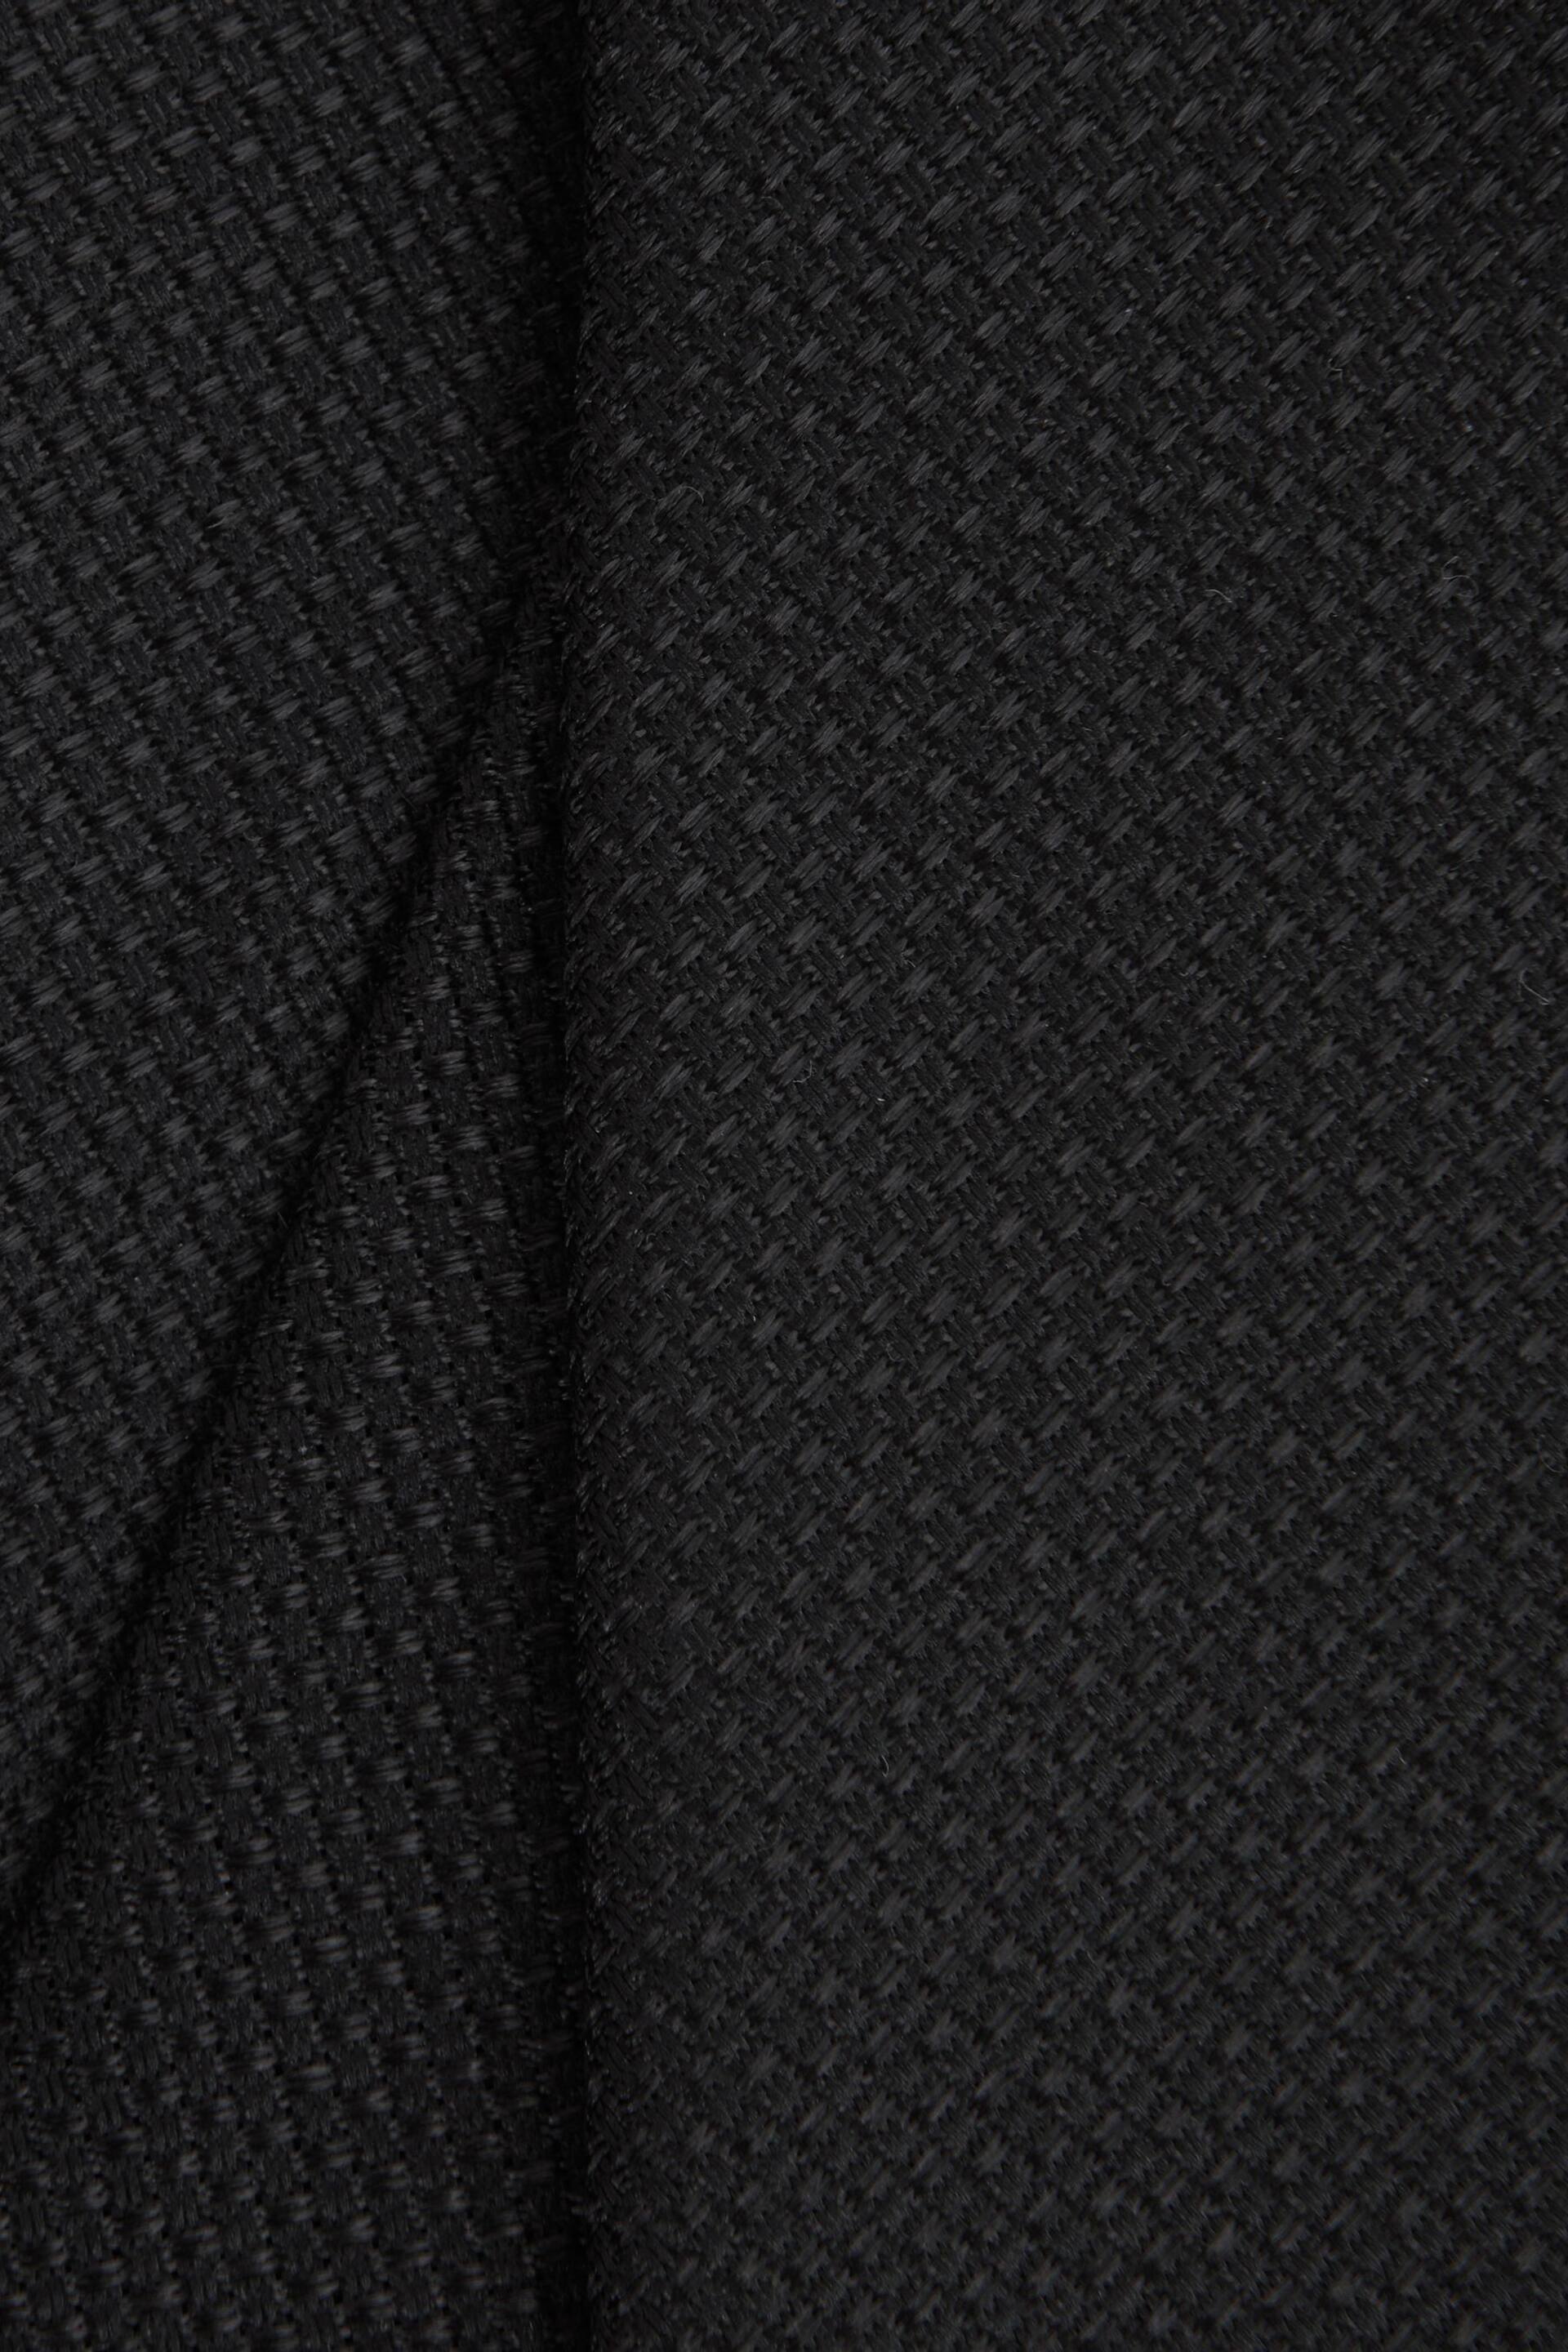 Reiss Black Ceremony Textured Silk Blend Tie - Image 5 of 5